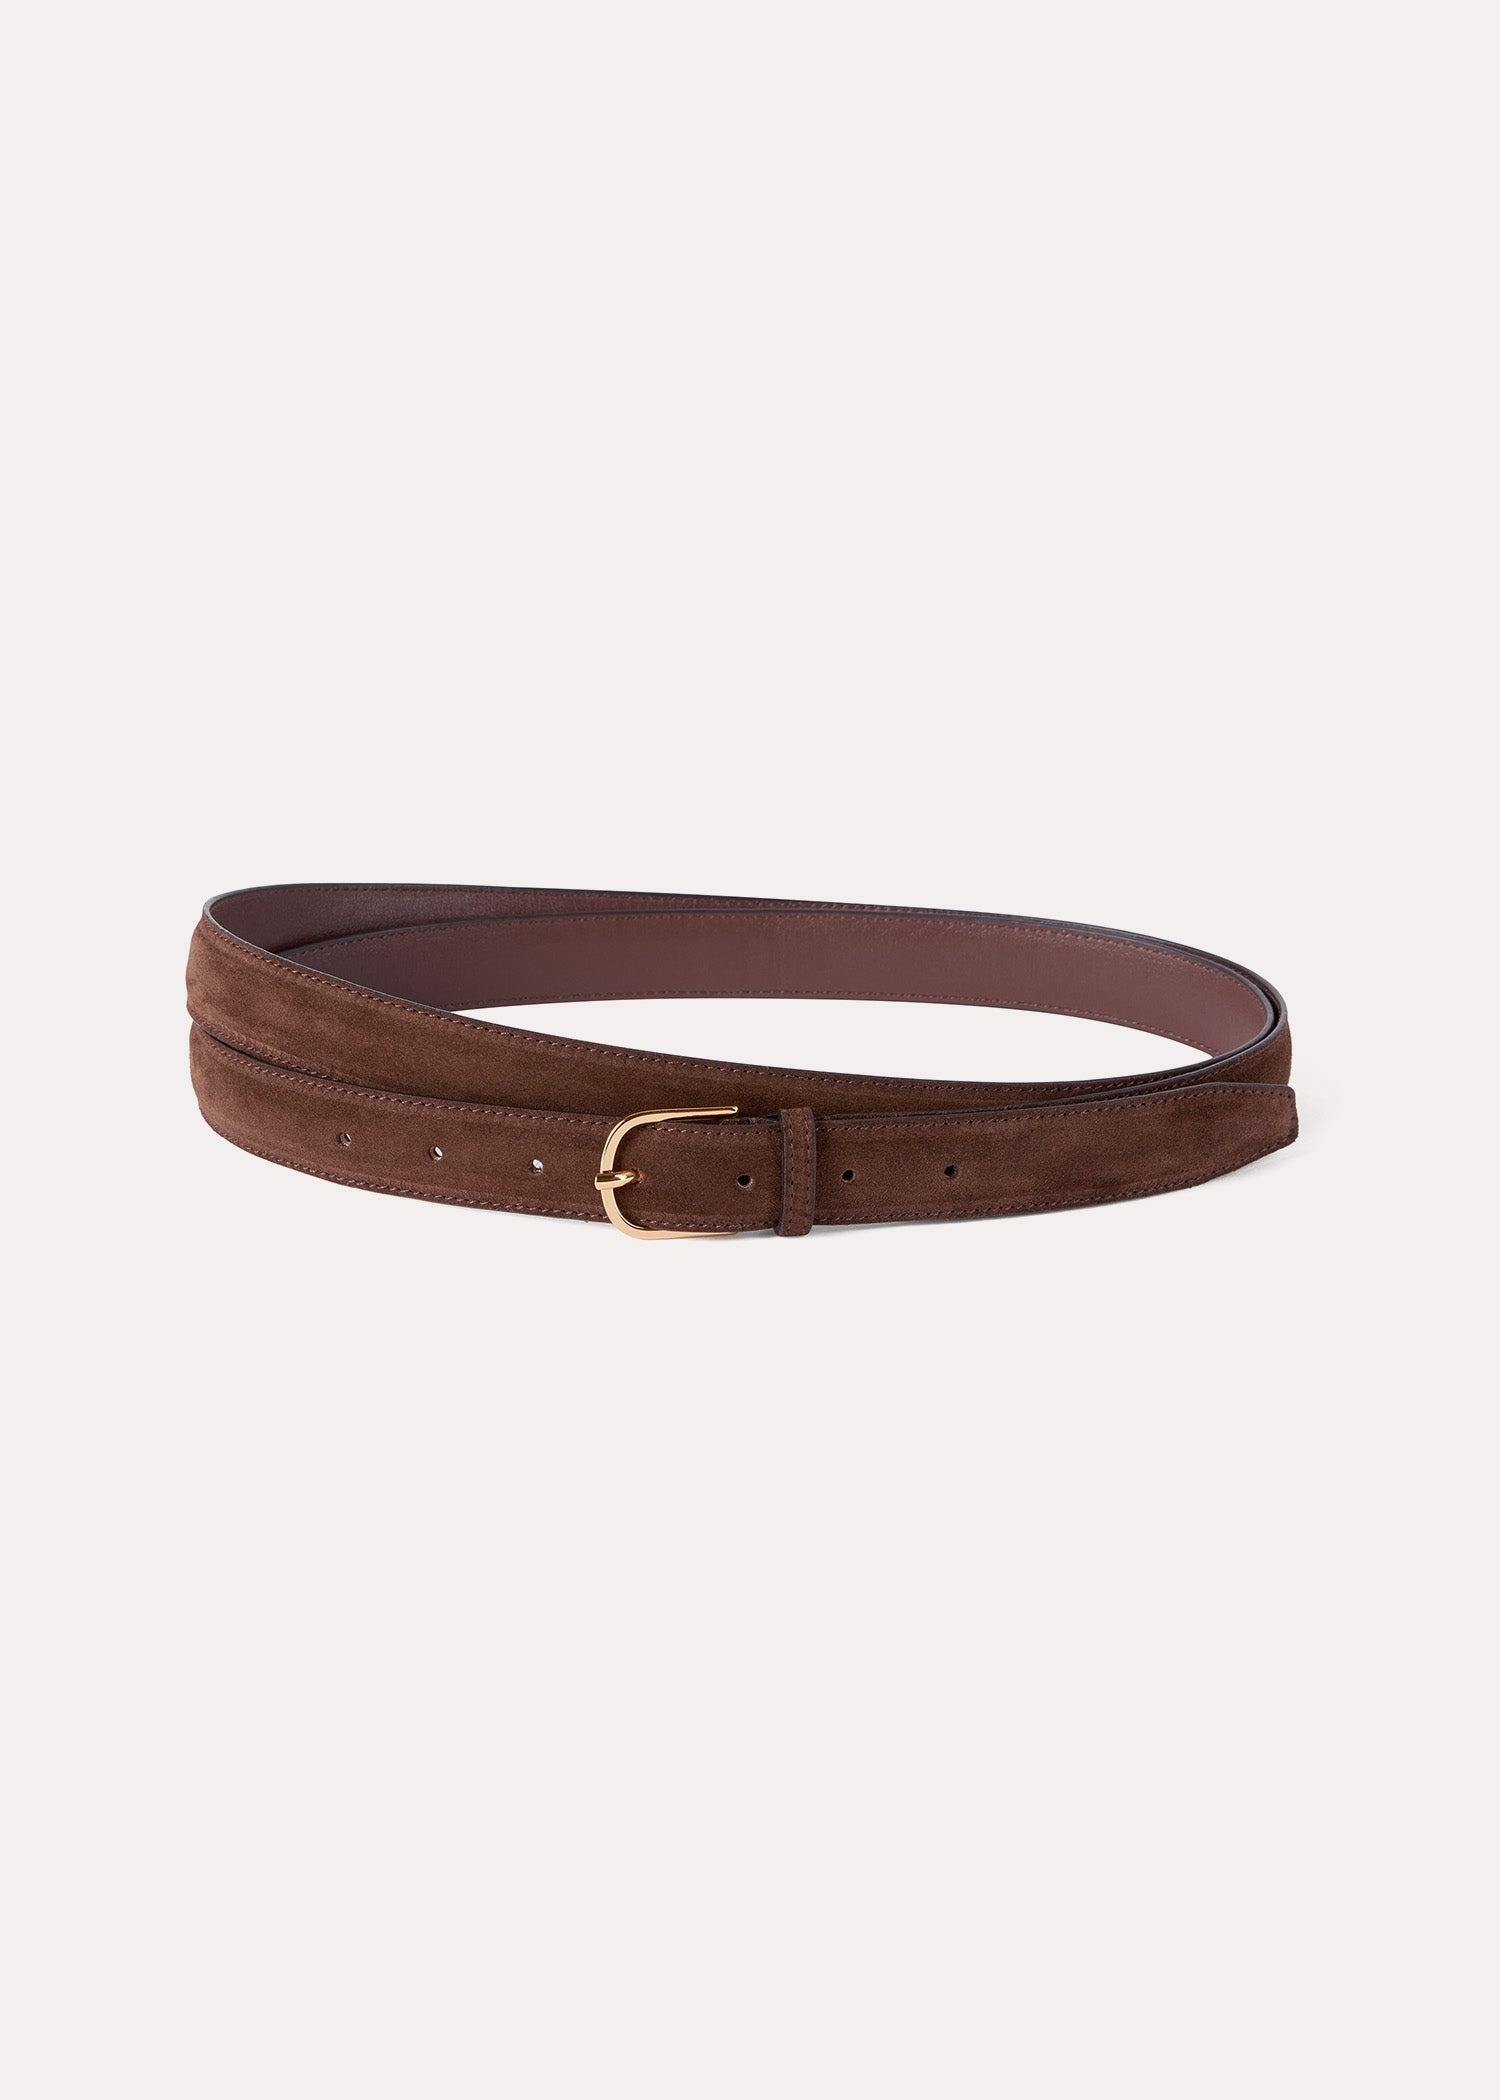 Wrap belt chocolate brown - 3